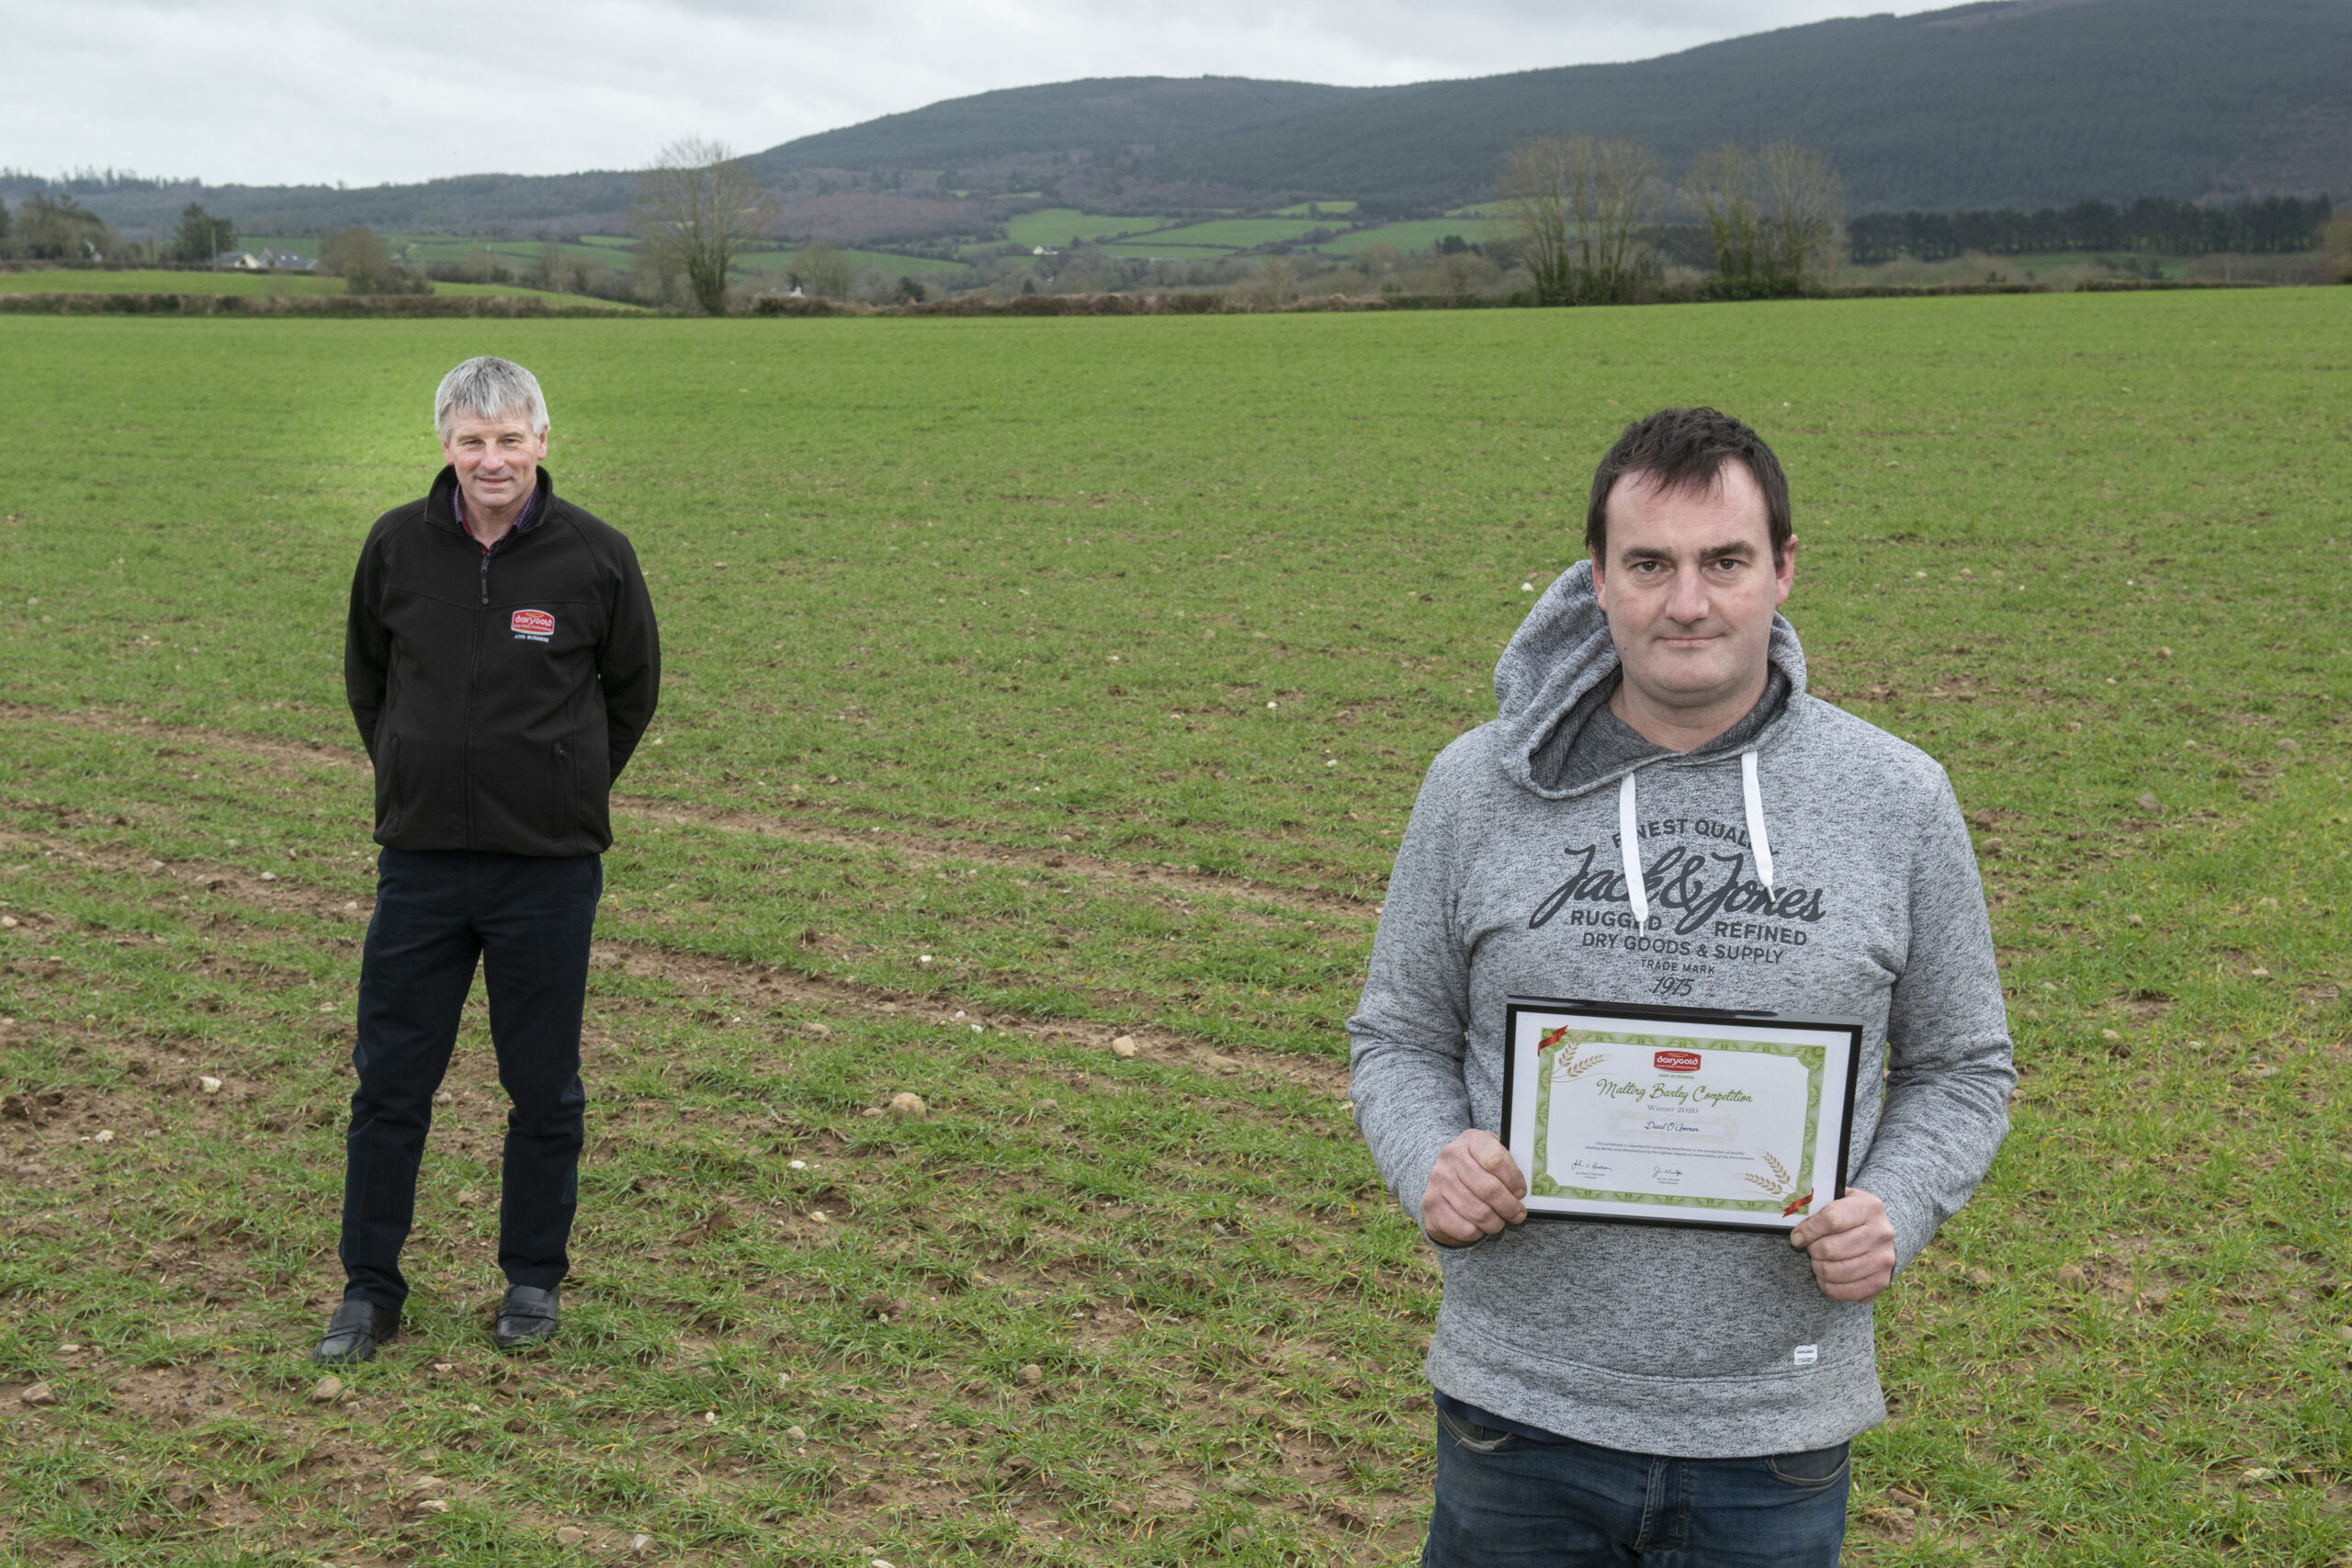 Castletownroche tillage farmer crowned Dairygold Malting Barley winner